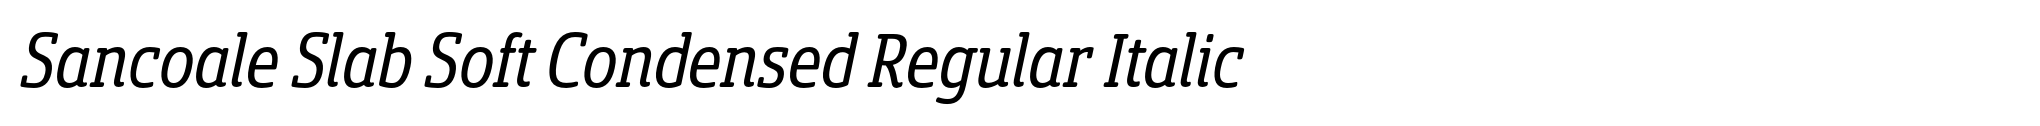 Sancoale Slab Soft Condensed Regular Italic image